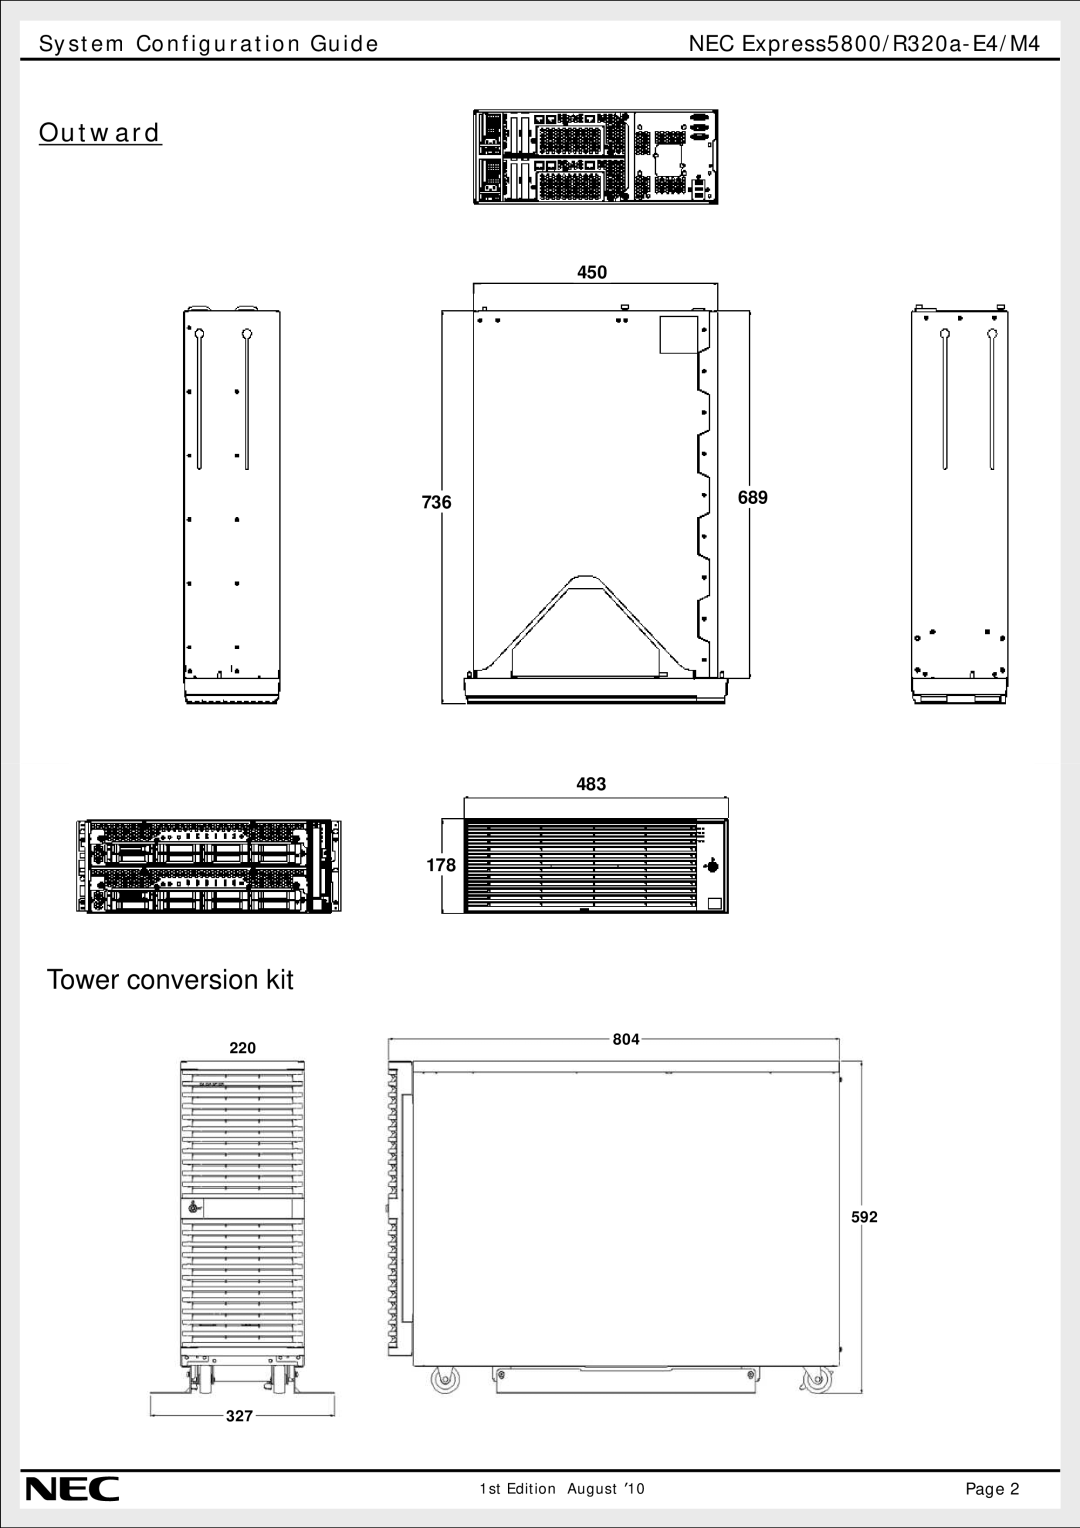 NEC R320A-E4 Outward, System Configuration Guide, NEC Express5800/R320a-E4/M4, 483 178, Tower conversion kit, 592 327 